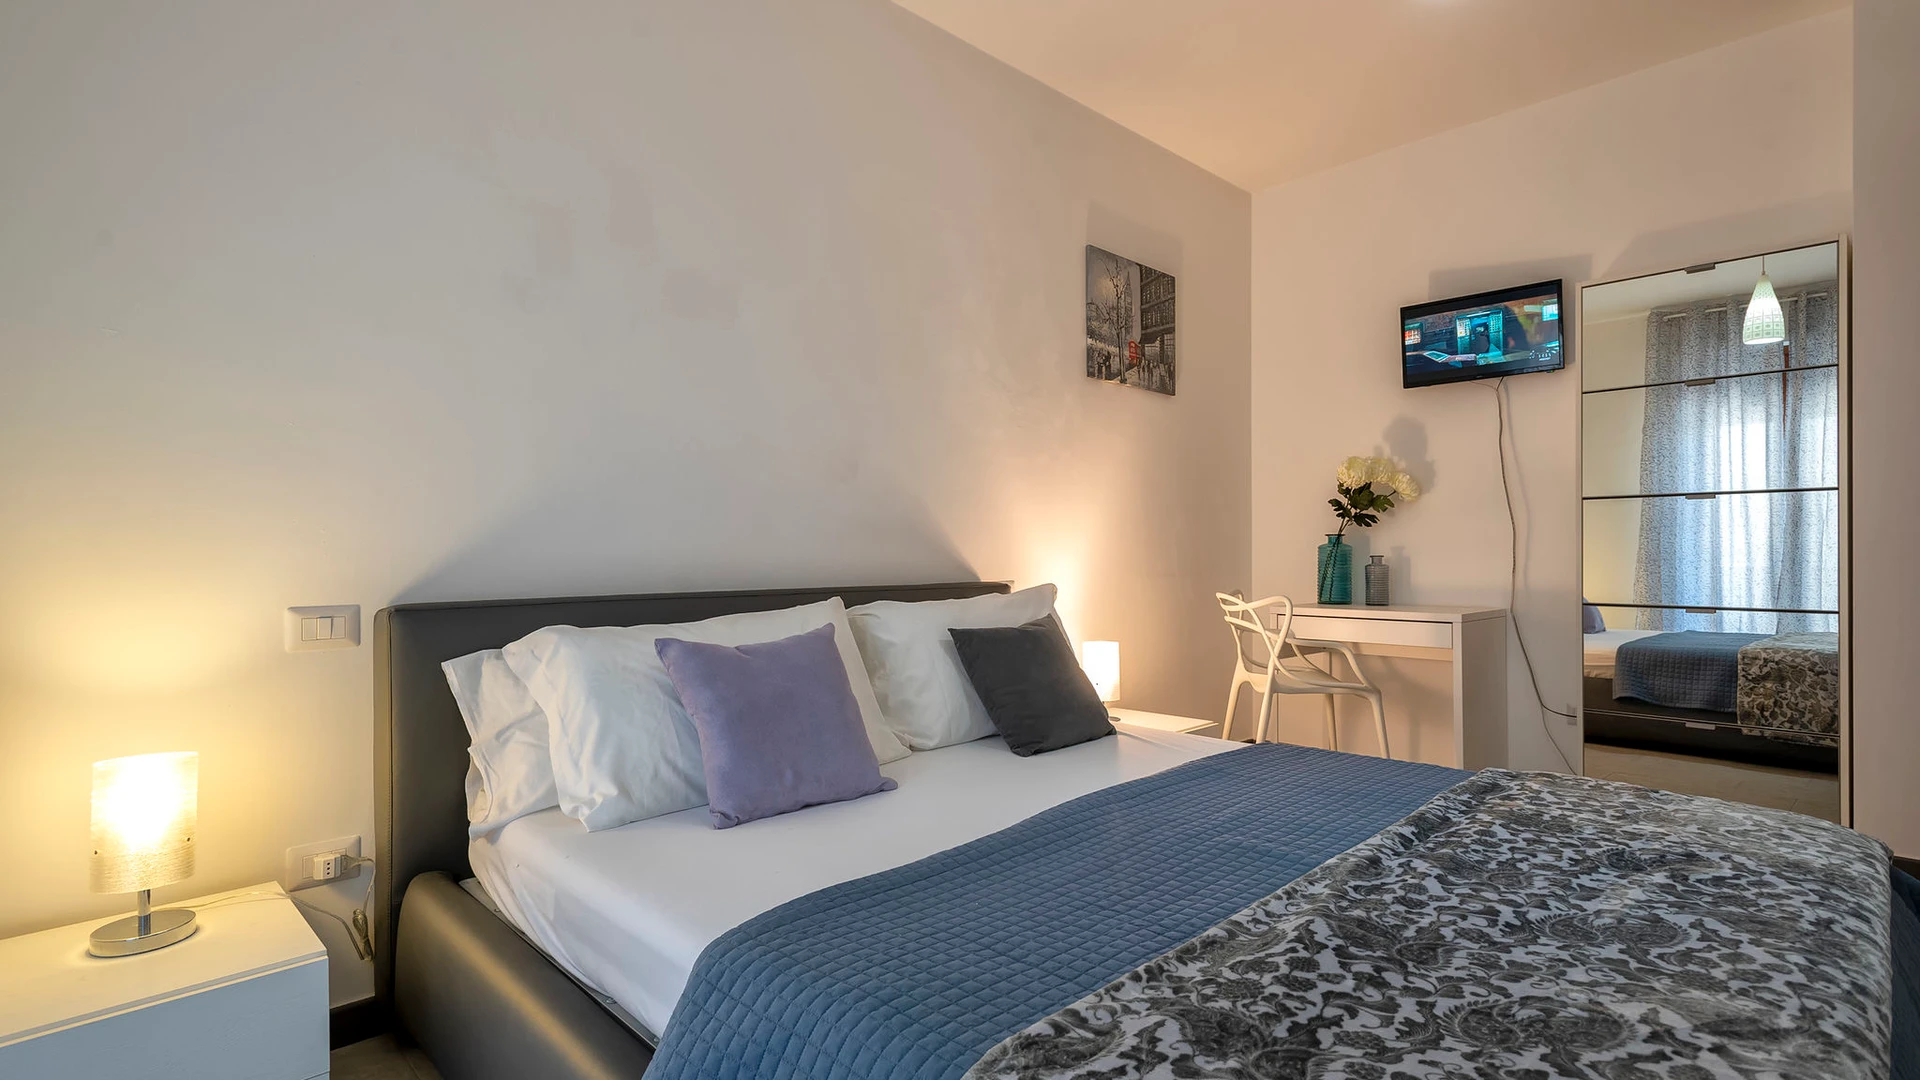 Two bedroom accommodation in L'alguer/alghero